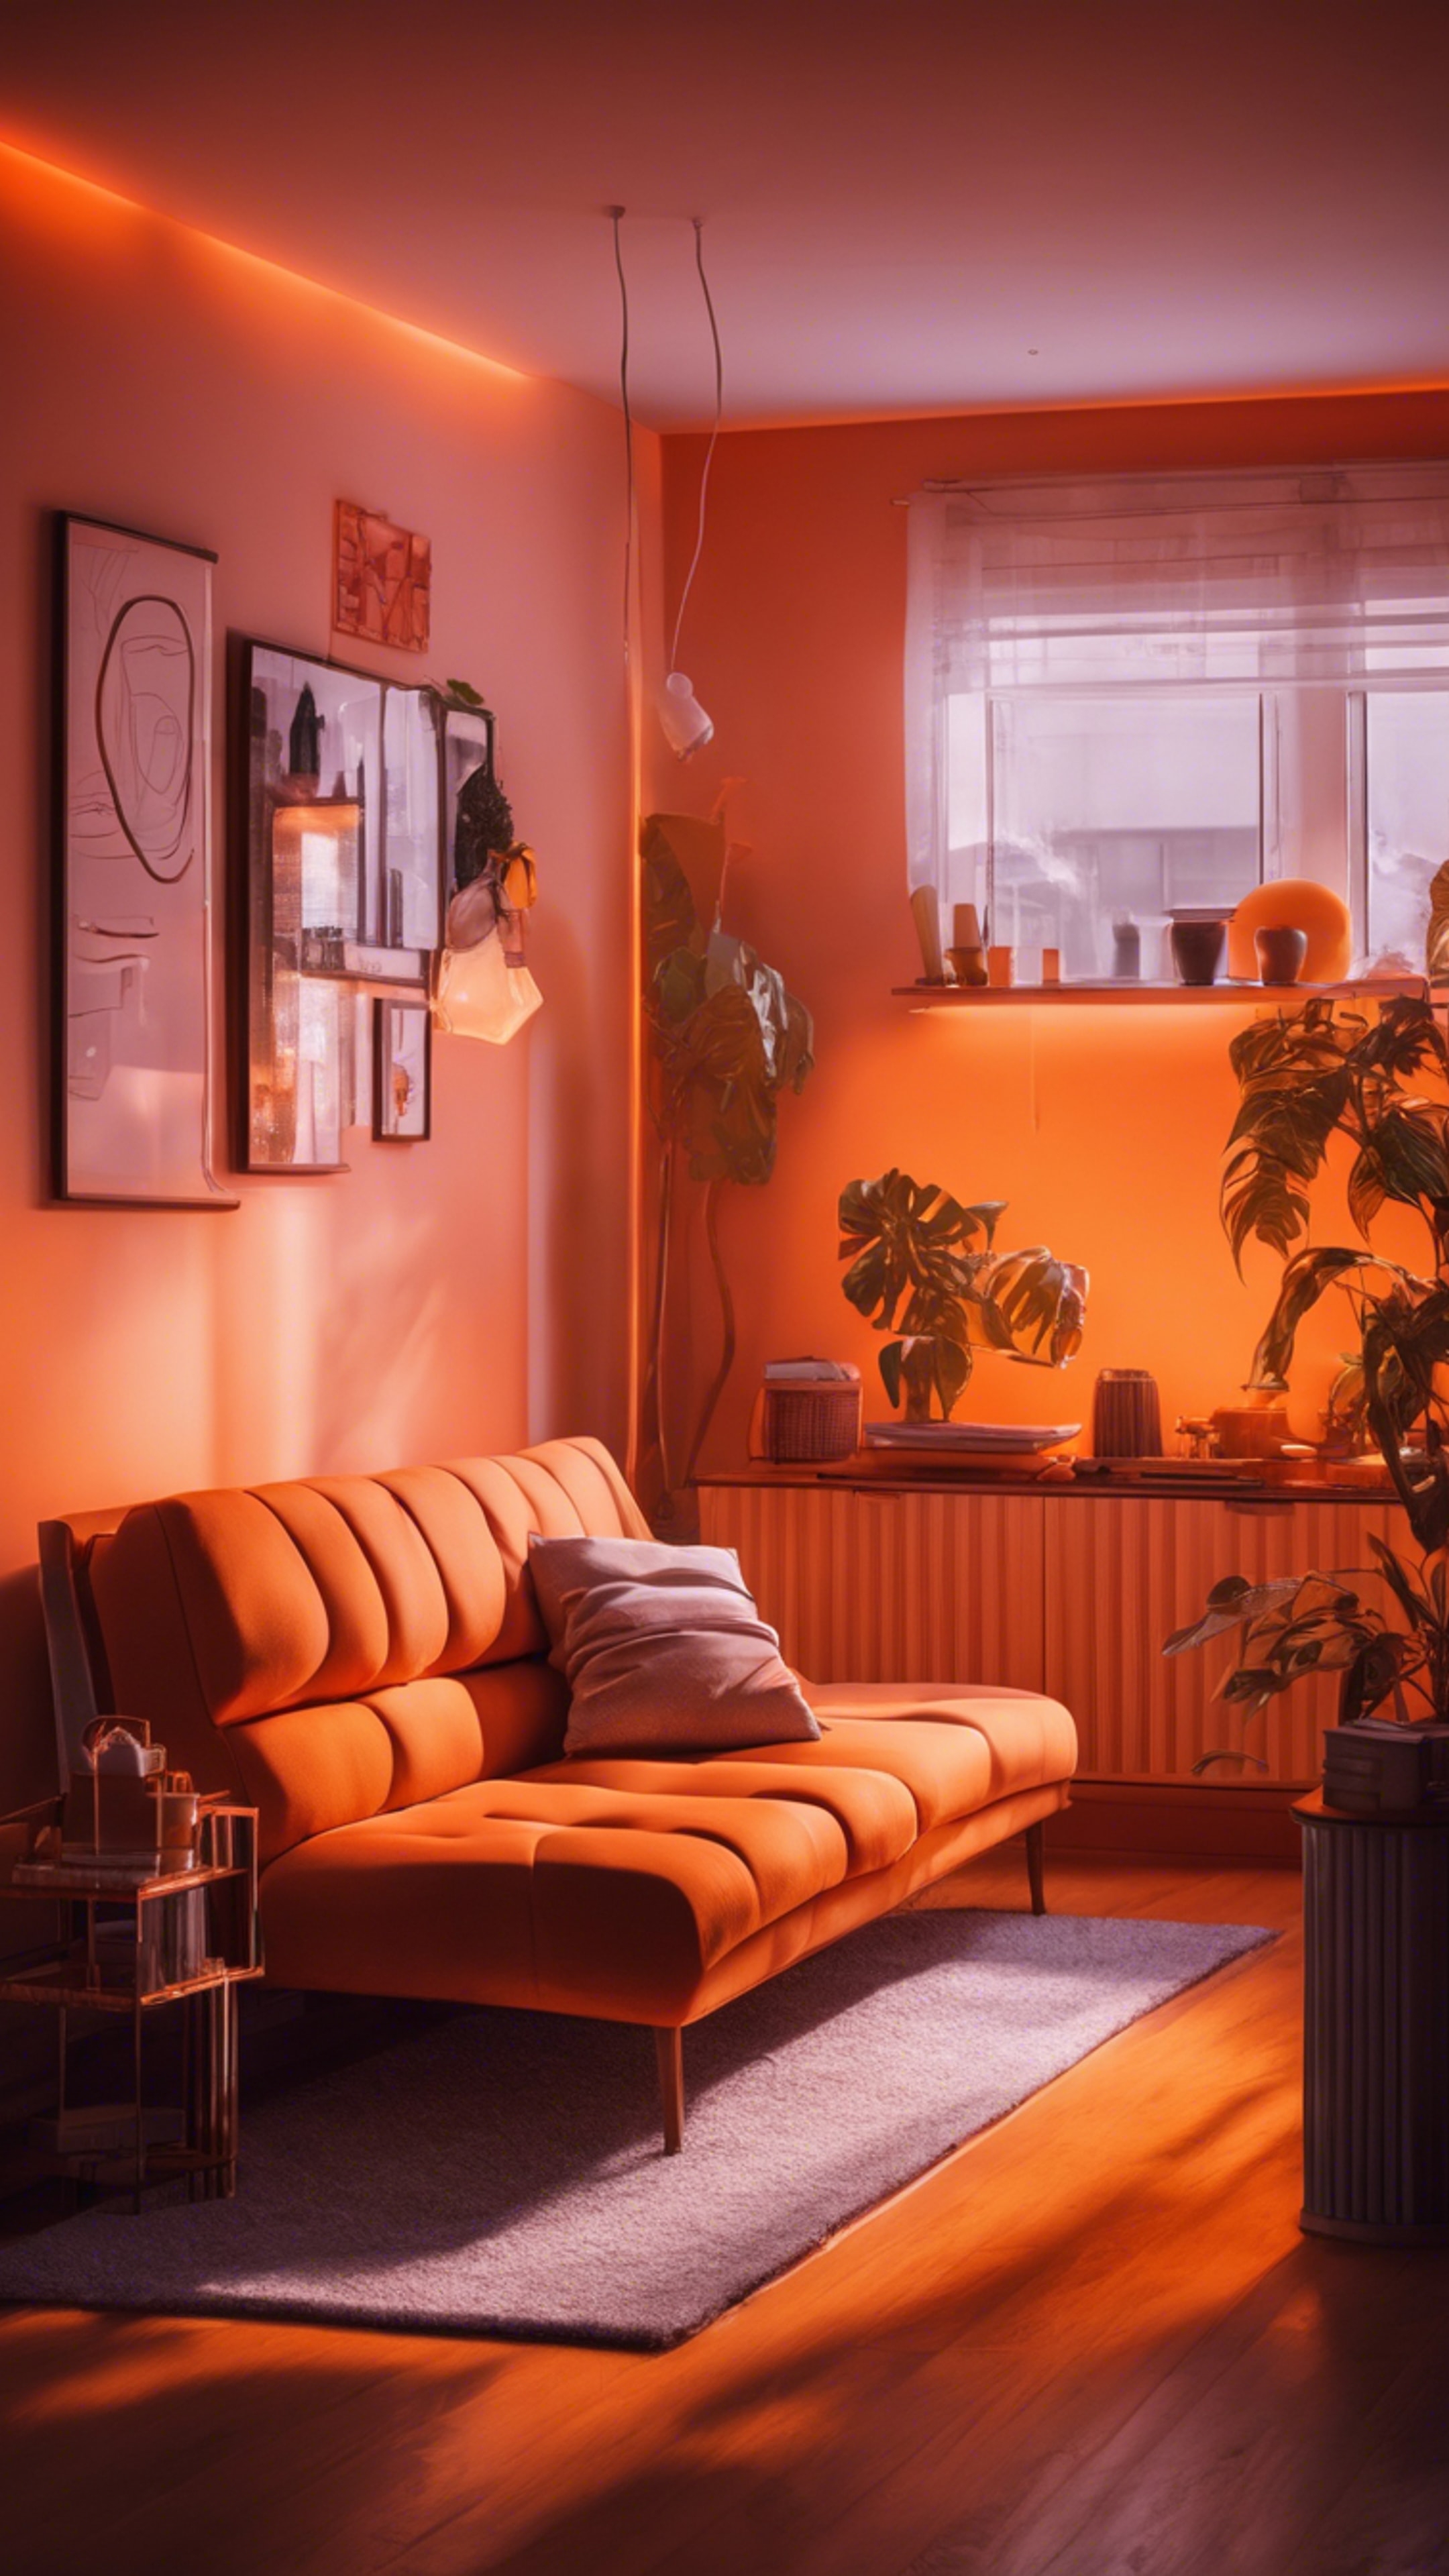 A fresh orange living room with trendy neon lights casting beautiful shadows.壁紙[39213640e9864c1aa0c4]